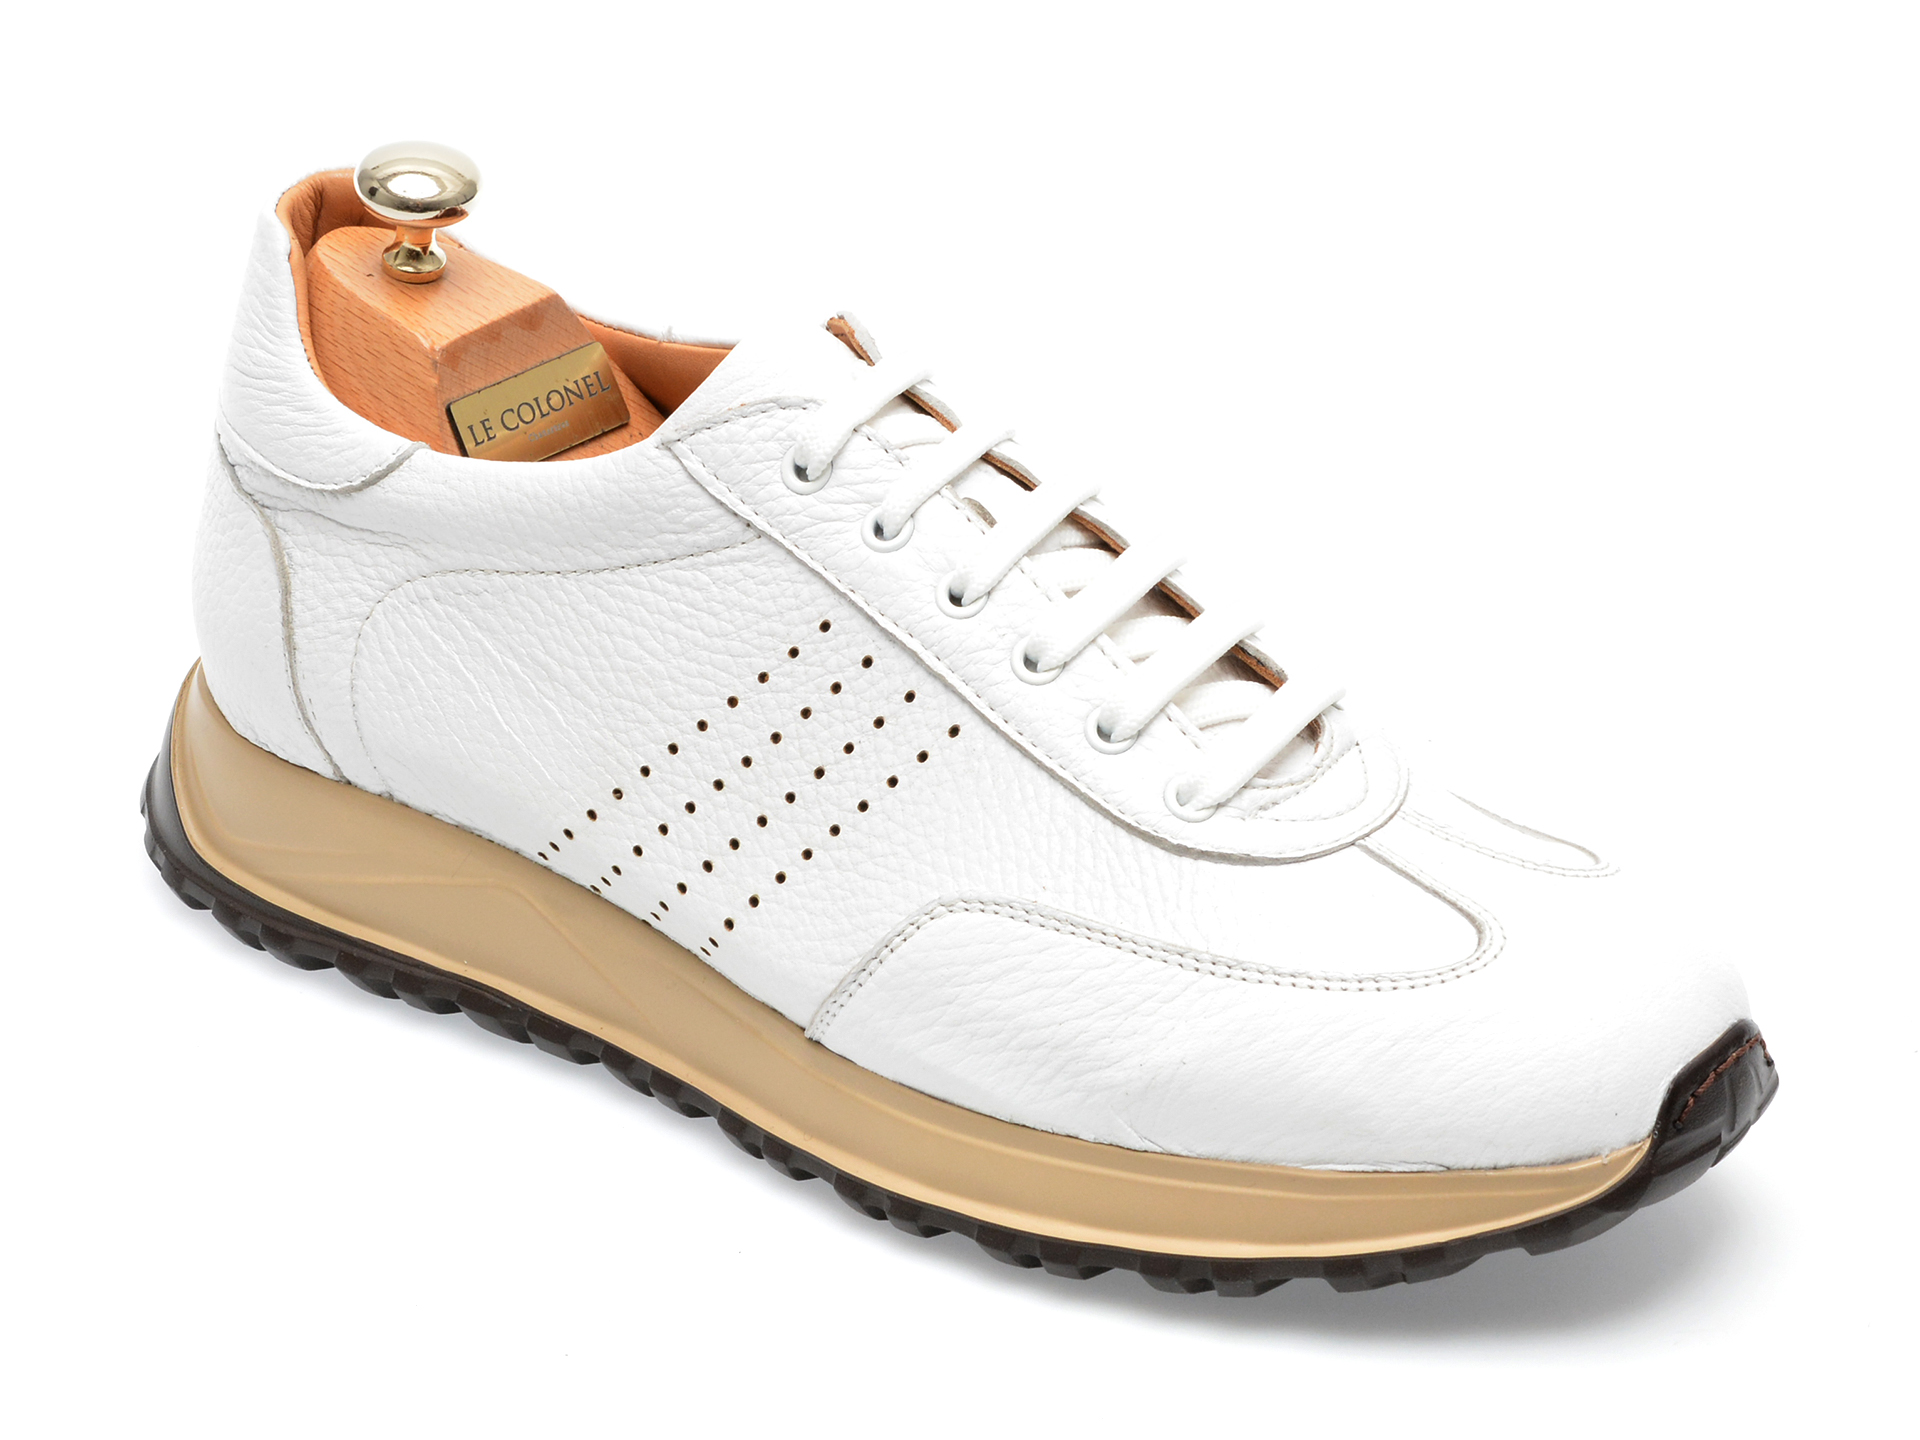 Pantofi LE COLONEL albi, 62818, din piele naturala /barbati/pantofi